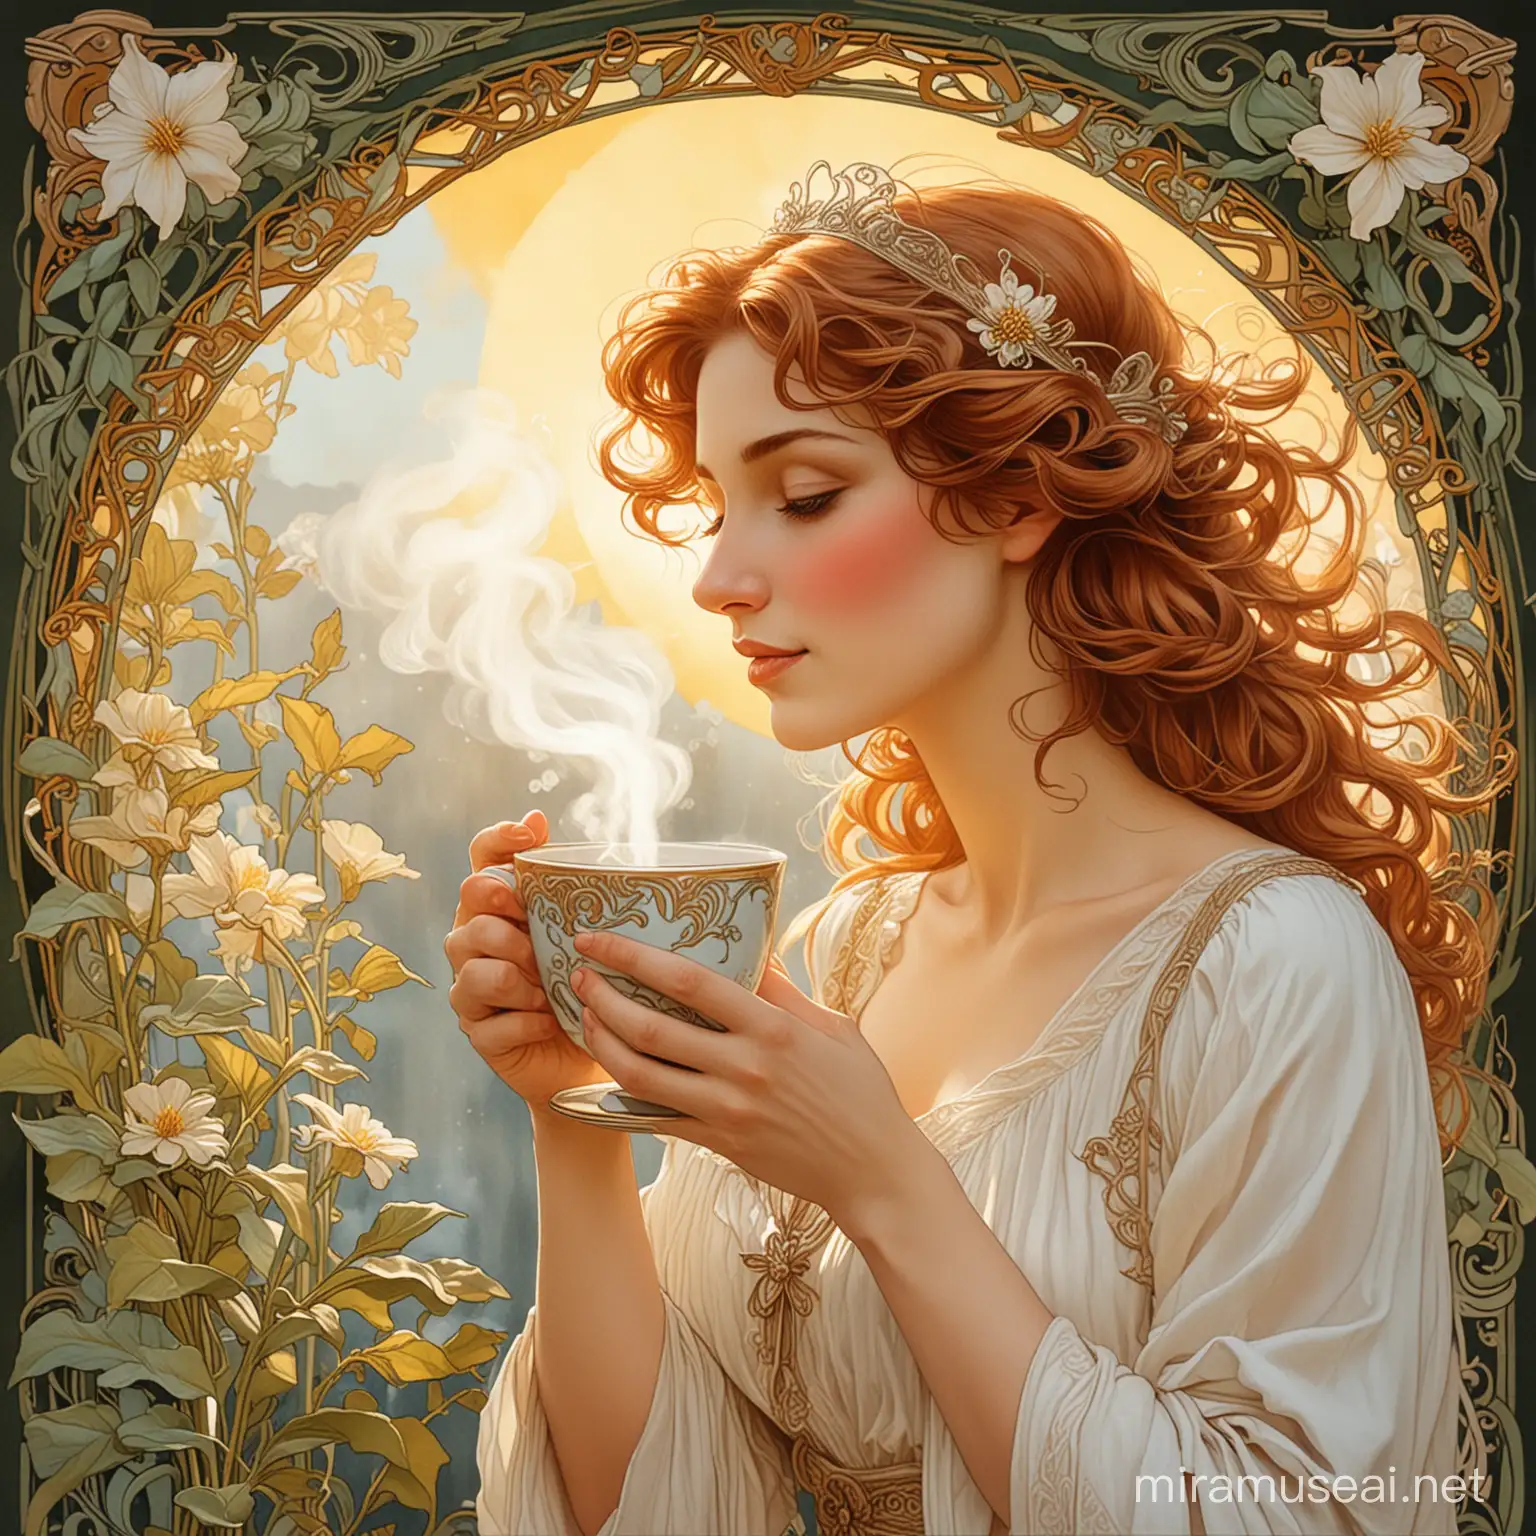 Elegant Art Nouveau Lady Enjoying Coffee Amidst Morning Sun and Whimsical Steam